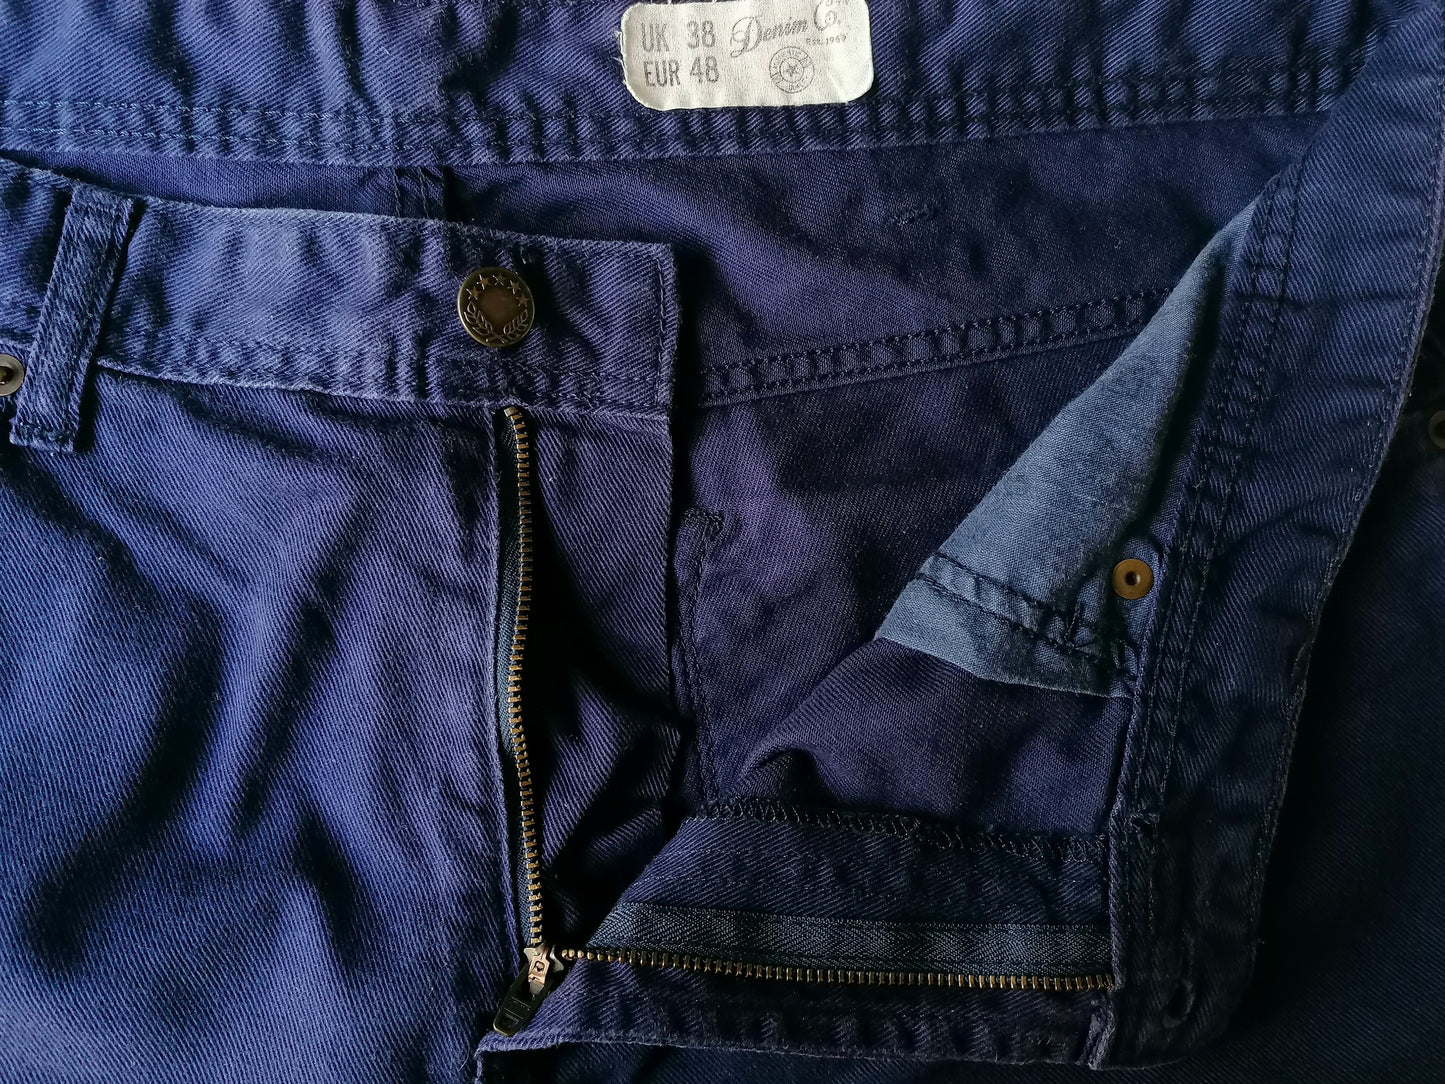 Denim&Co korte broek. Donker Blauw gekleurd. Maat W38.